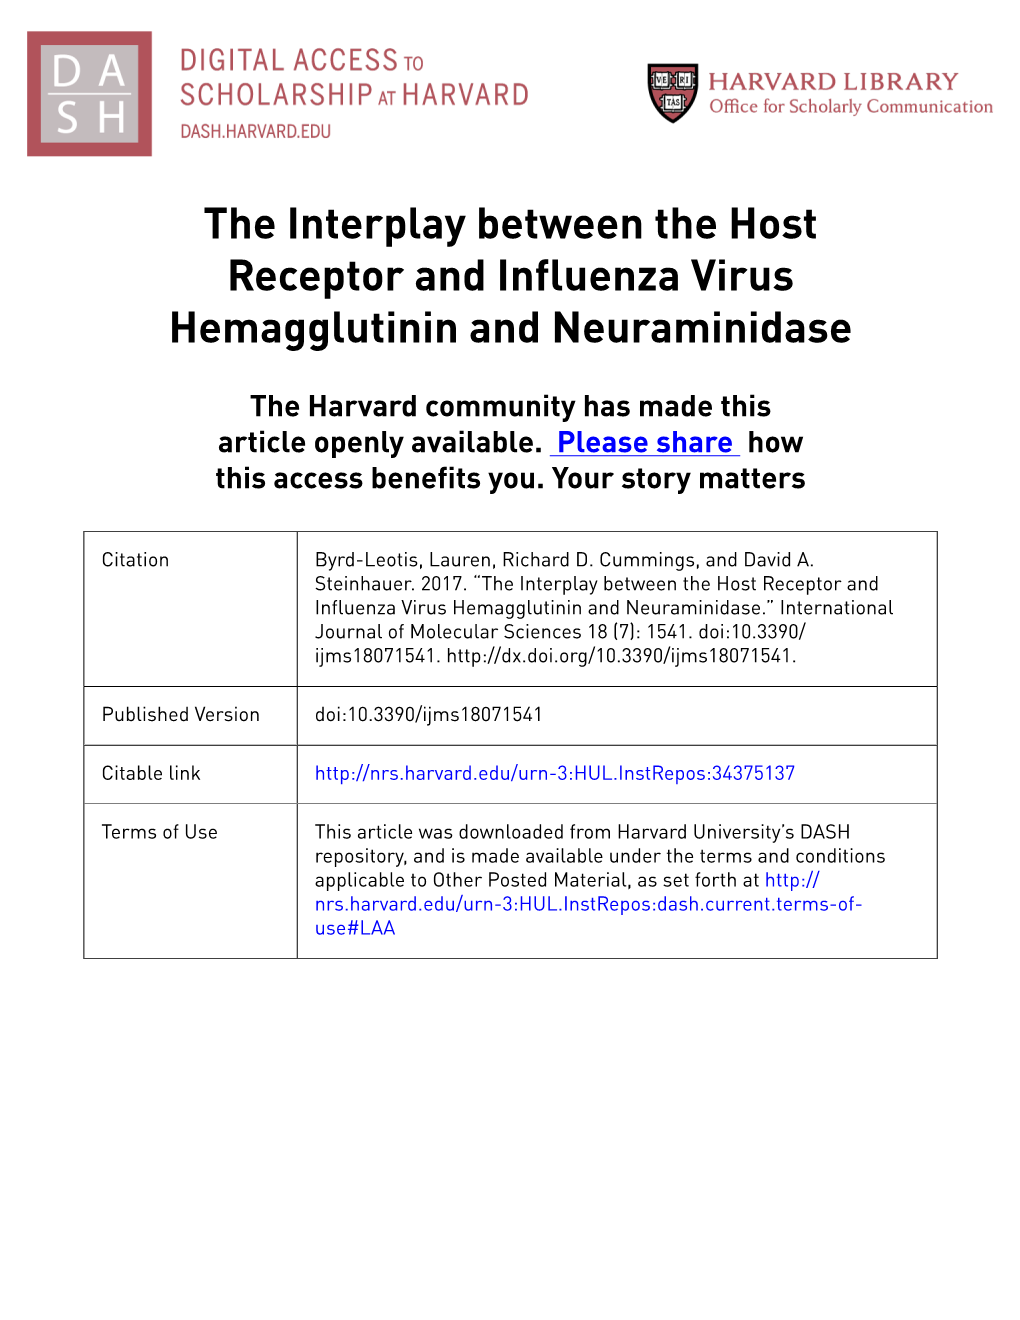 The Interplay Between the Host Receptor and Influenza Virus Hemagglutinin and Neuraminidase